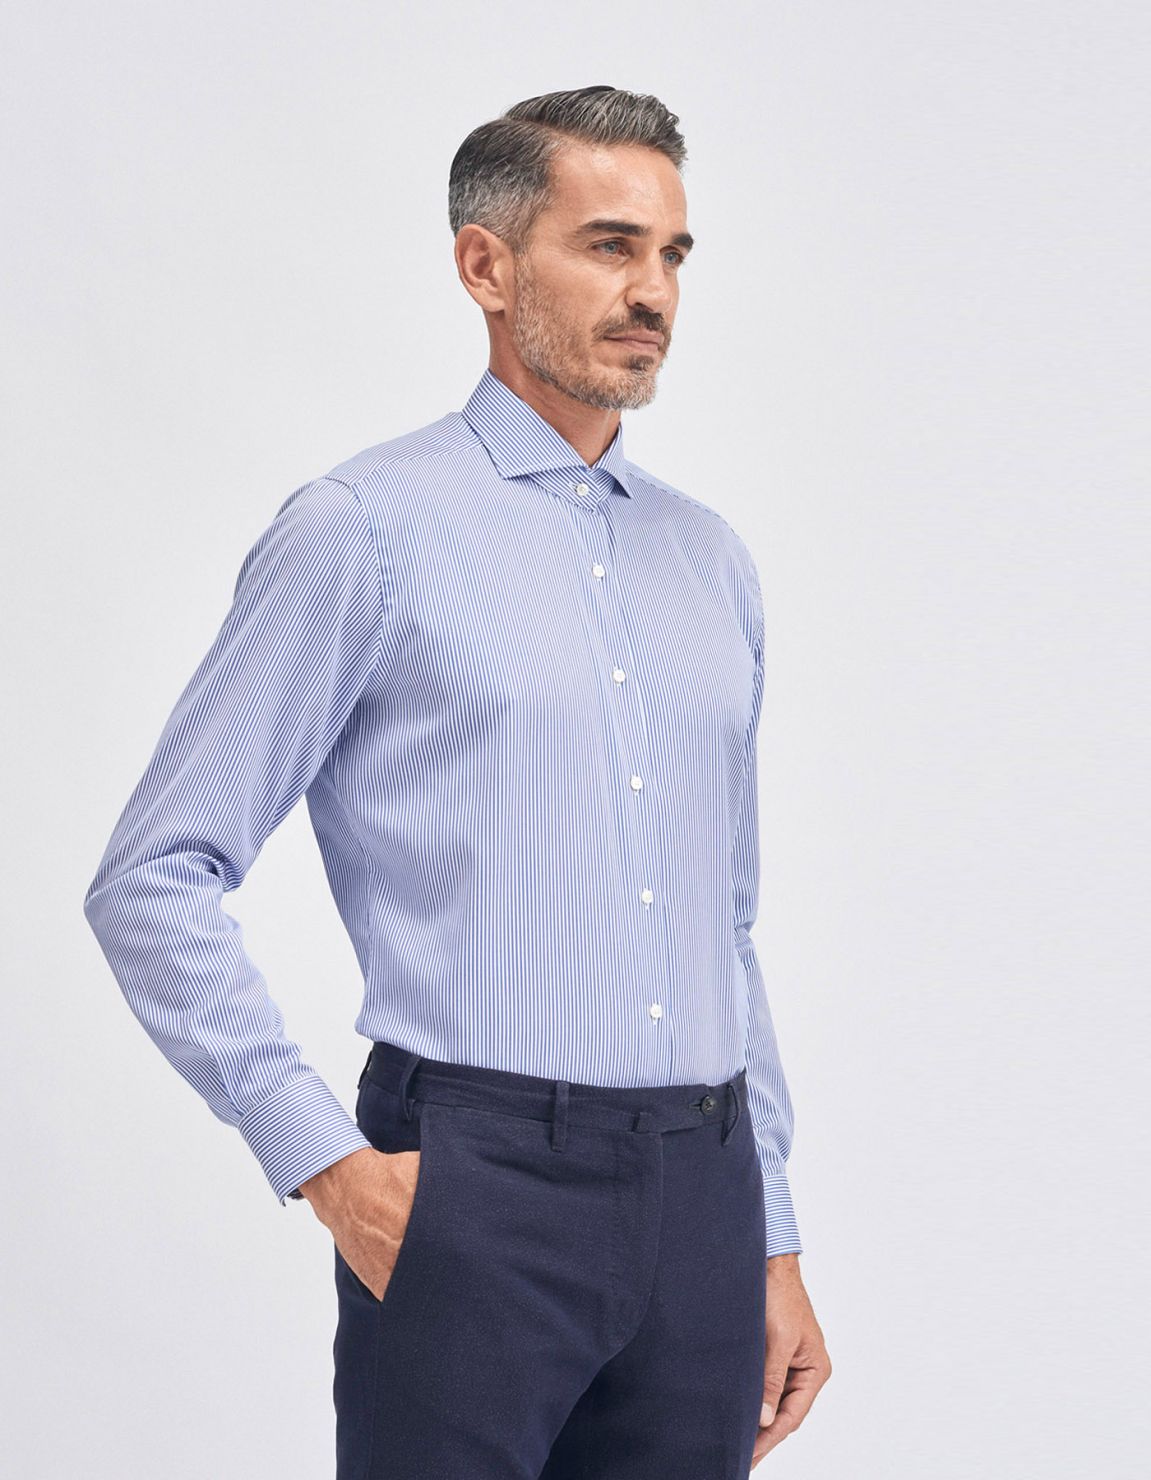 Shirt Collar cutaway Blue Twill Tailor Custom Fit 1